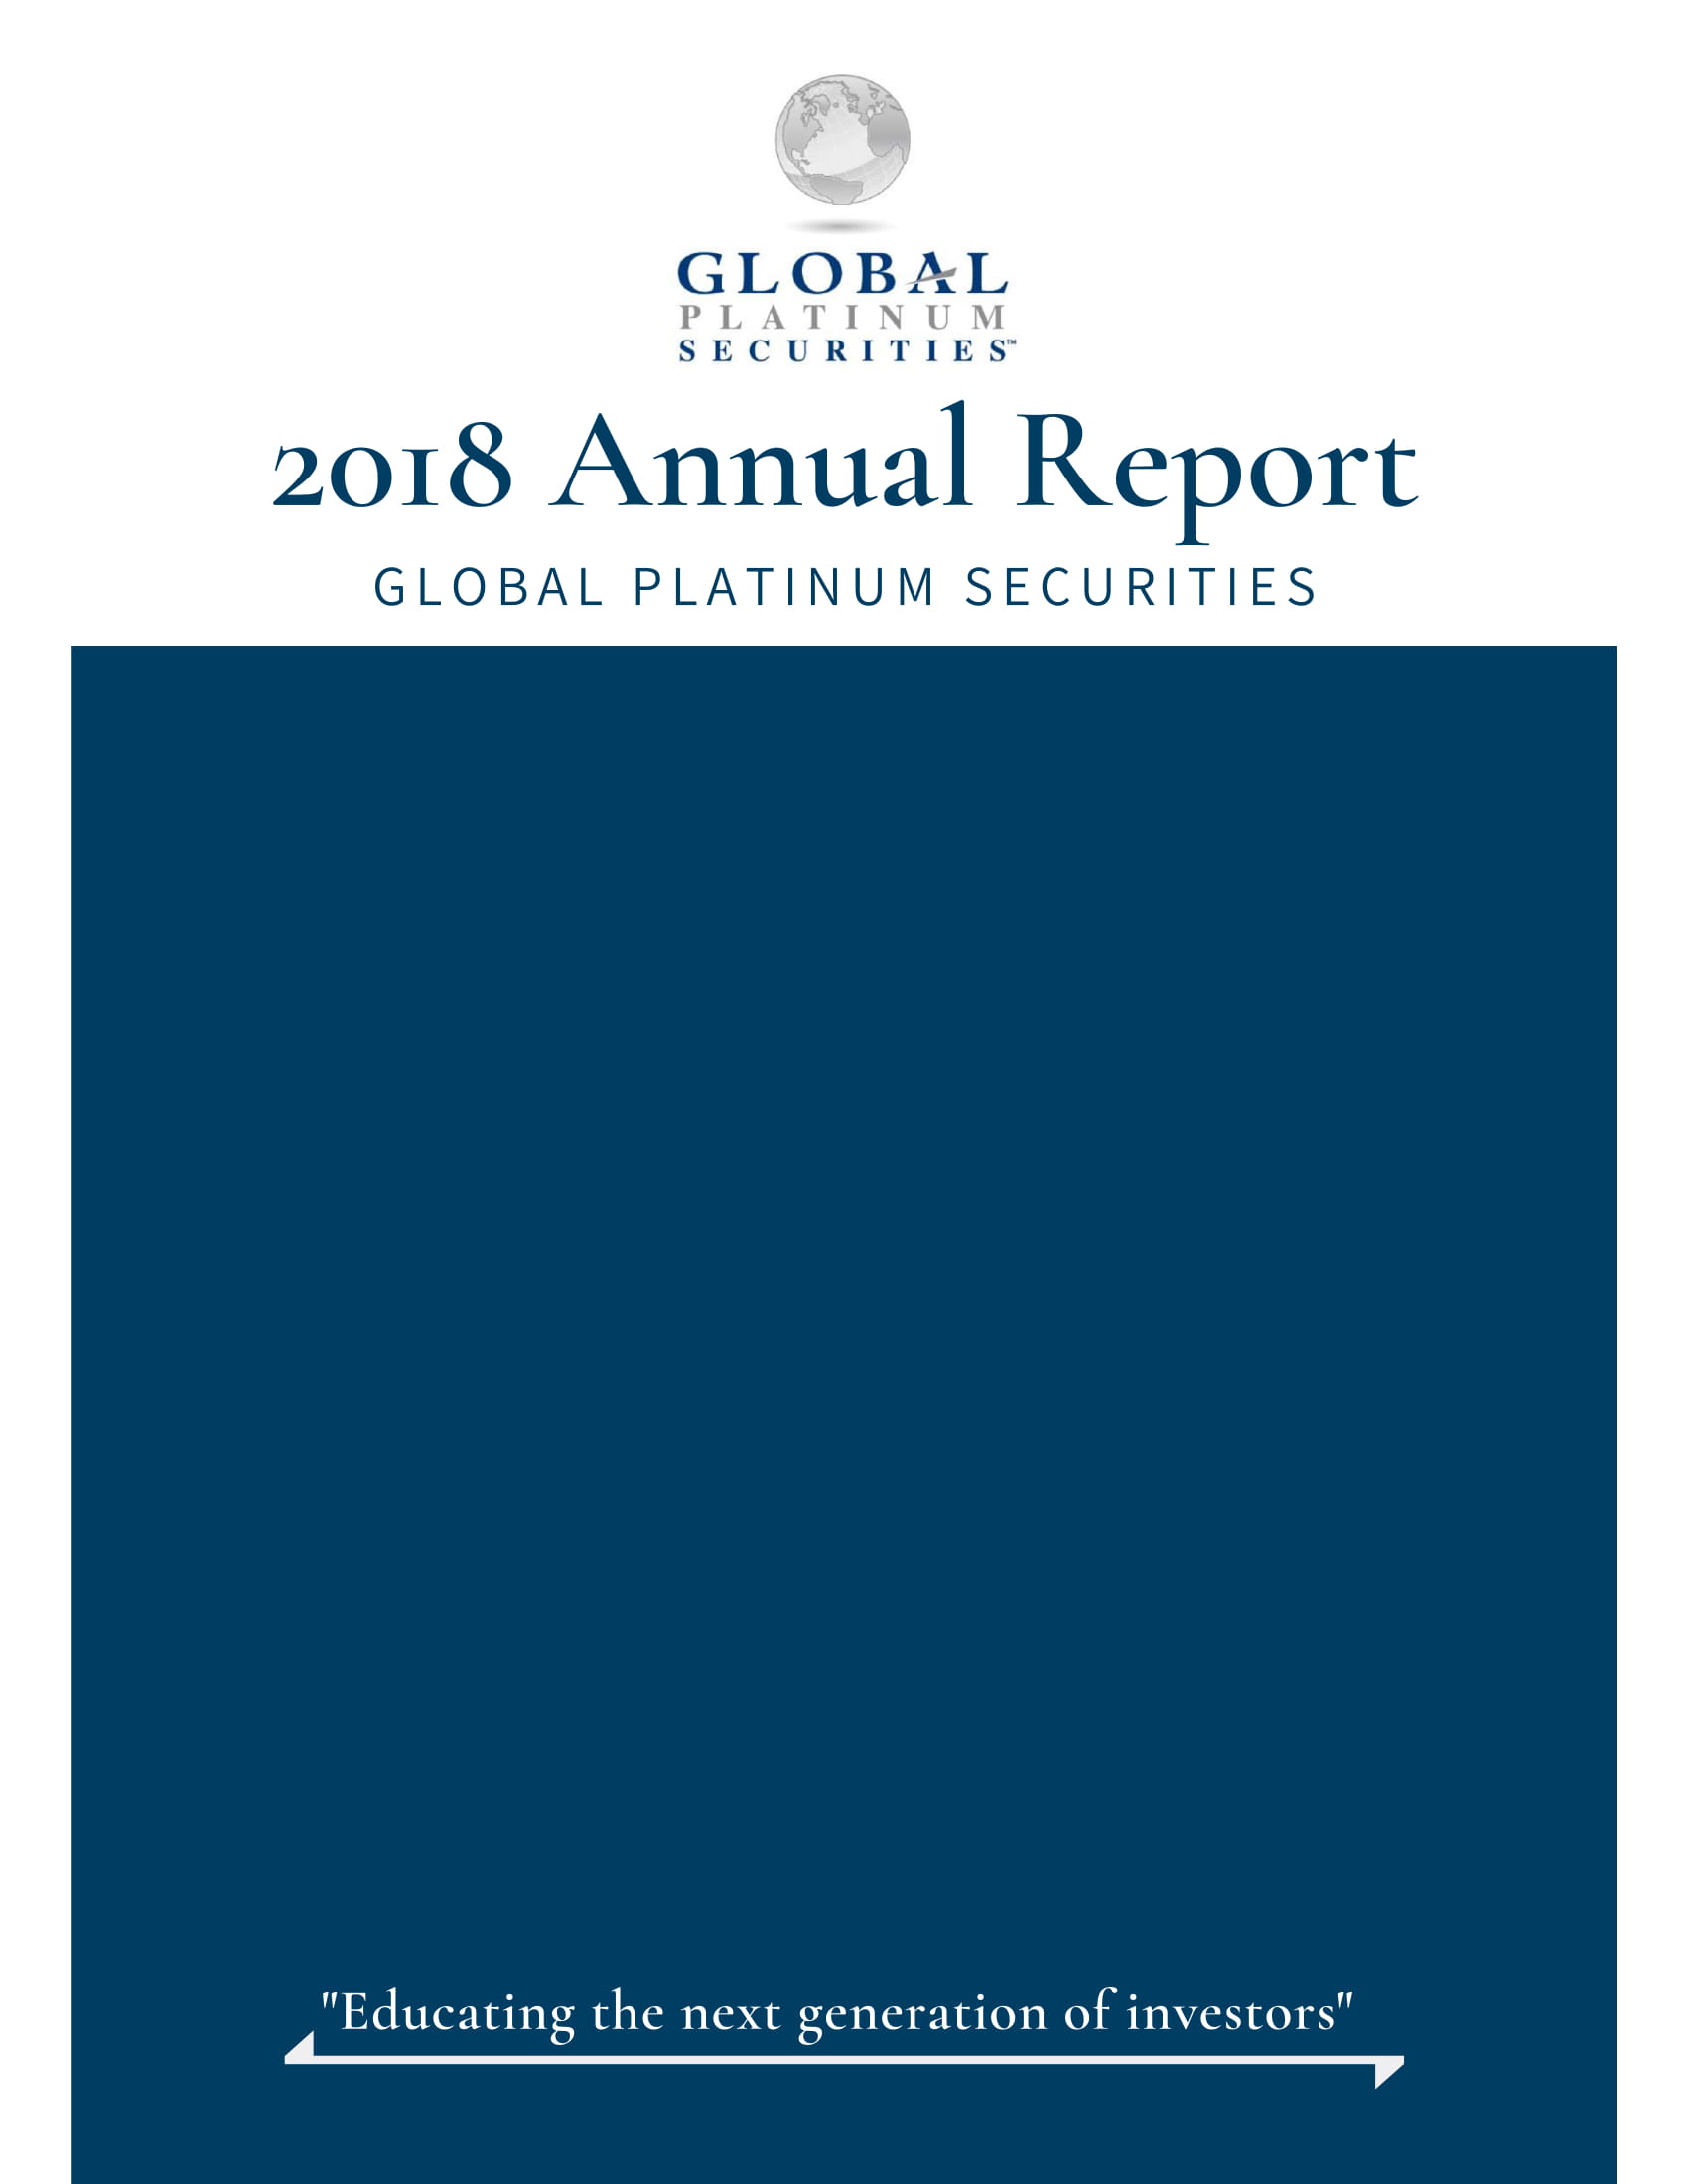 GPS 2019 Annual Report-1.jpg